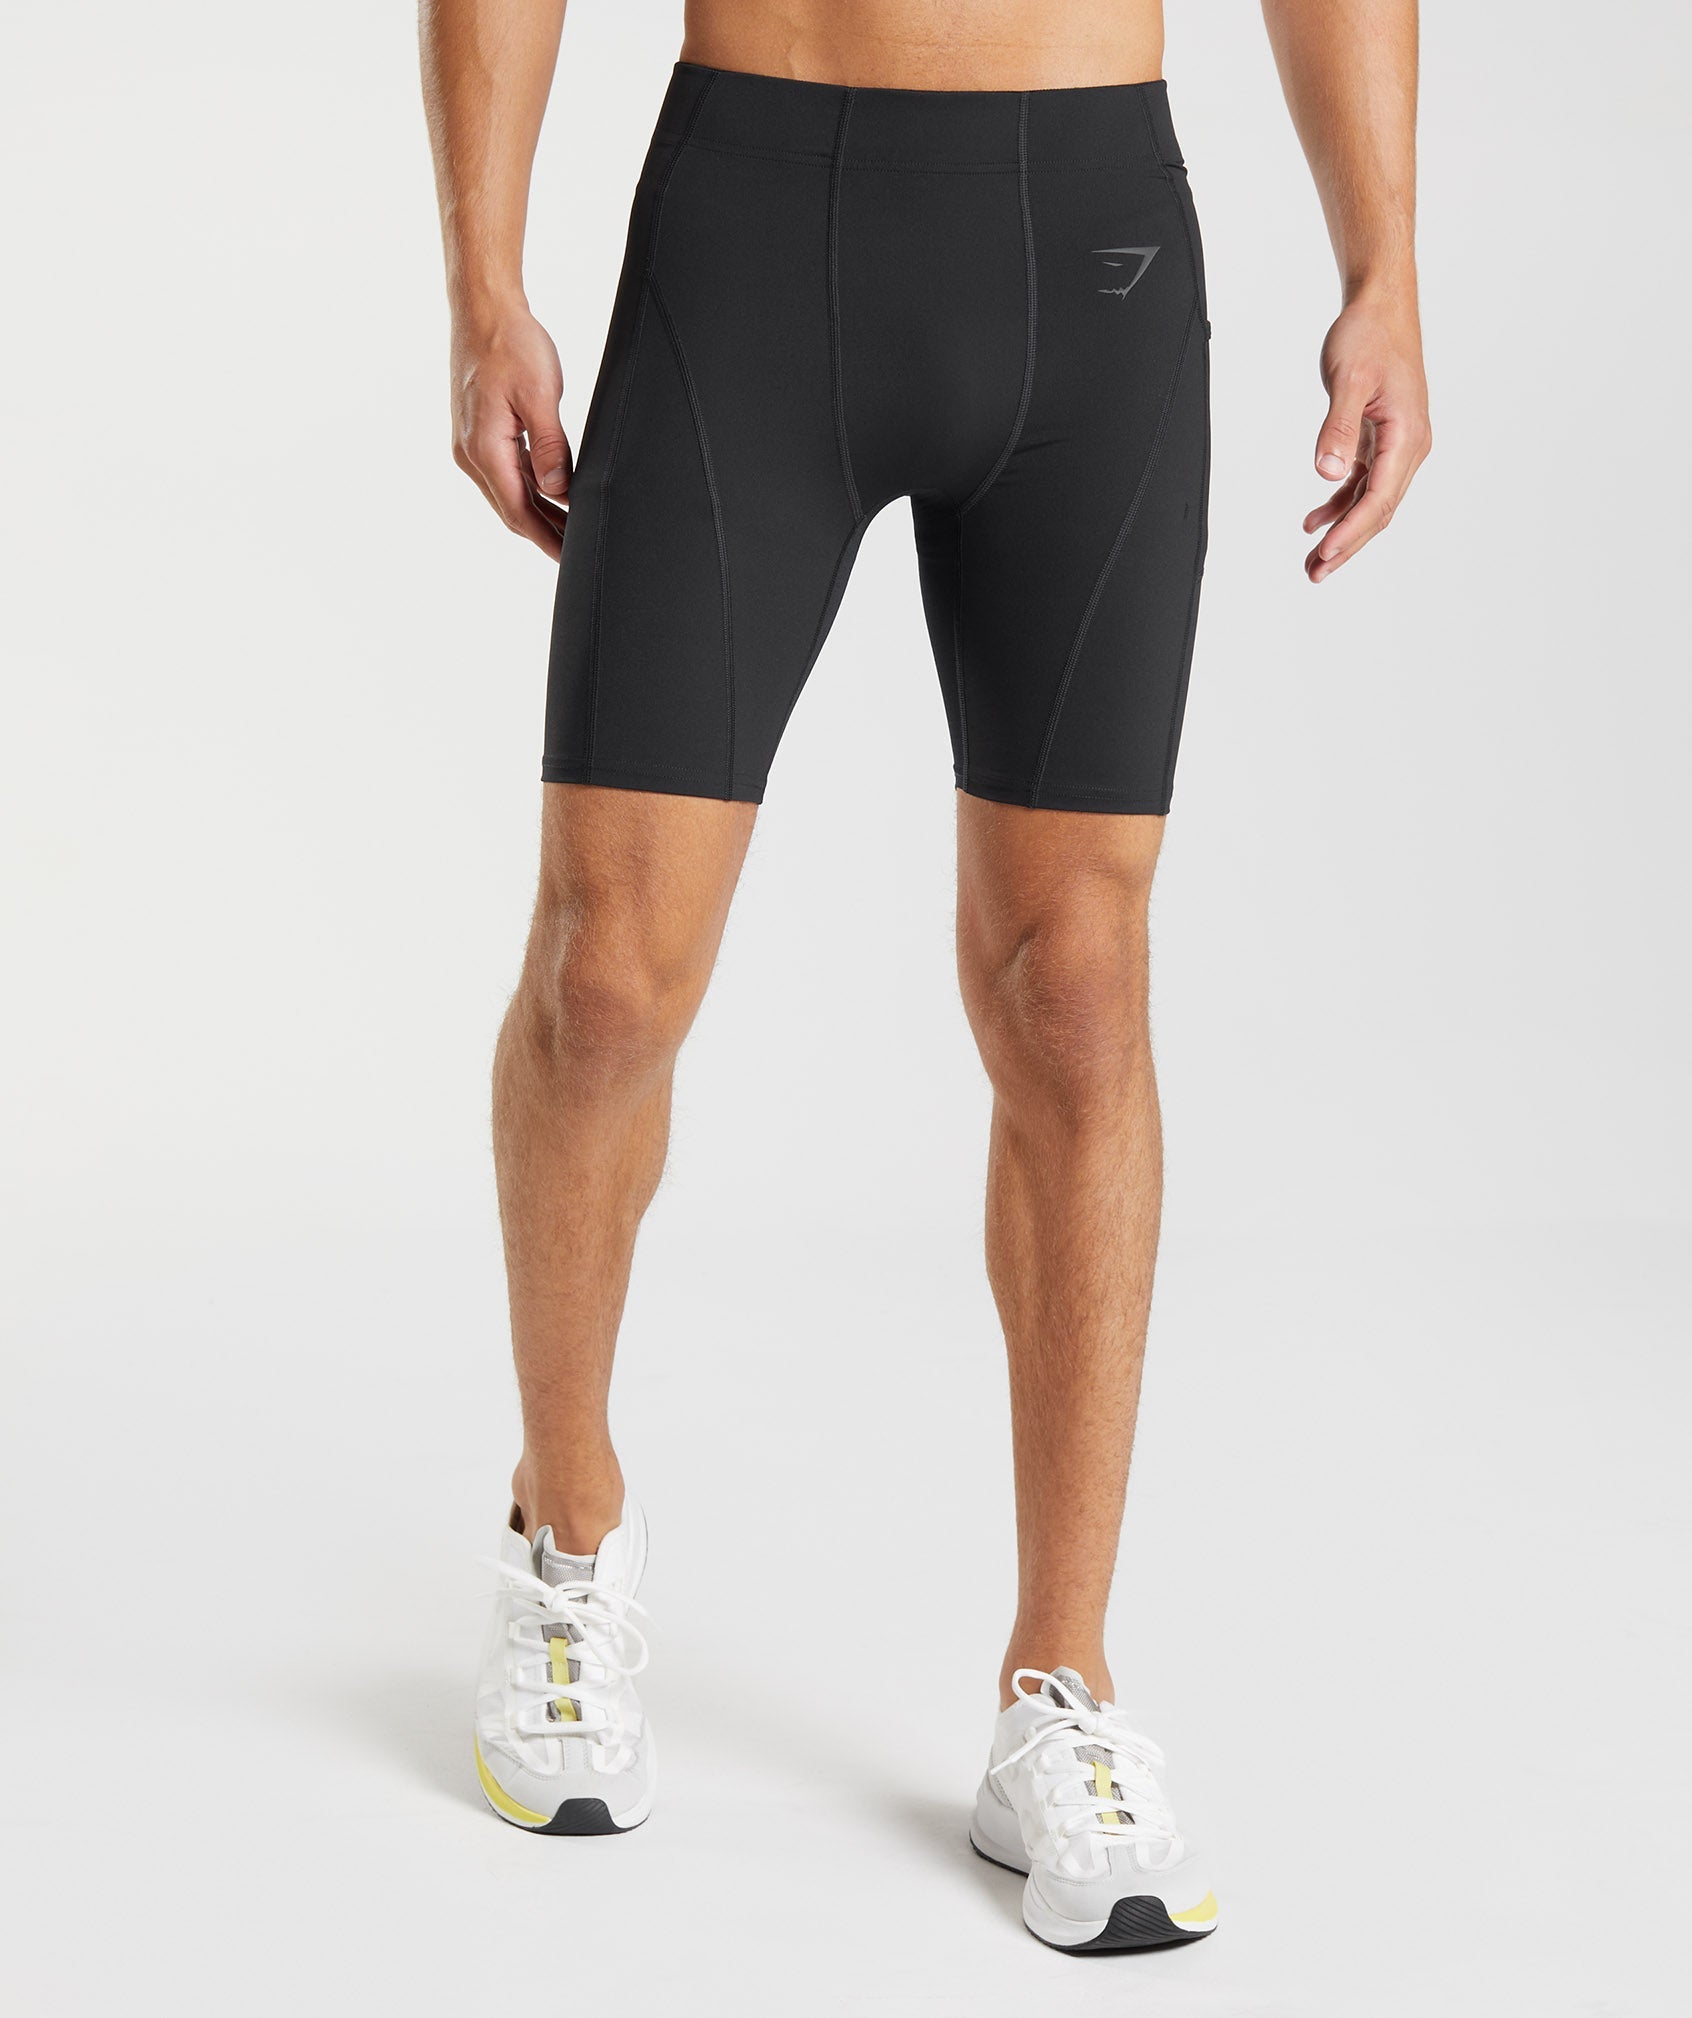 ABTIOYLLZ Compression Shorts for Men Spandex Running Workout Athletic  Baselayer Underwear Training Shorts Pocket 3 Pack# Red#06 With Pockets  Medium